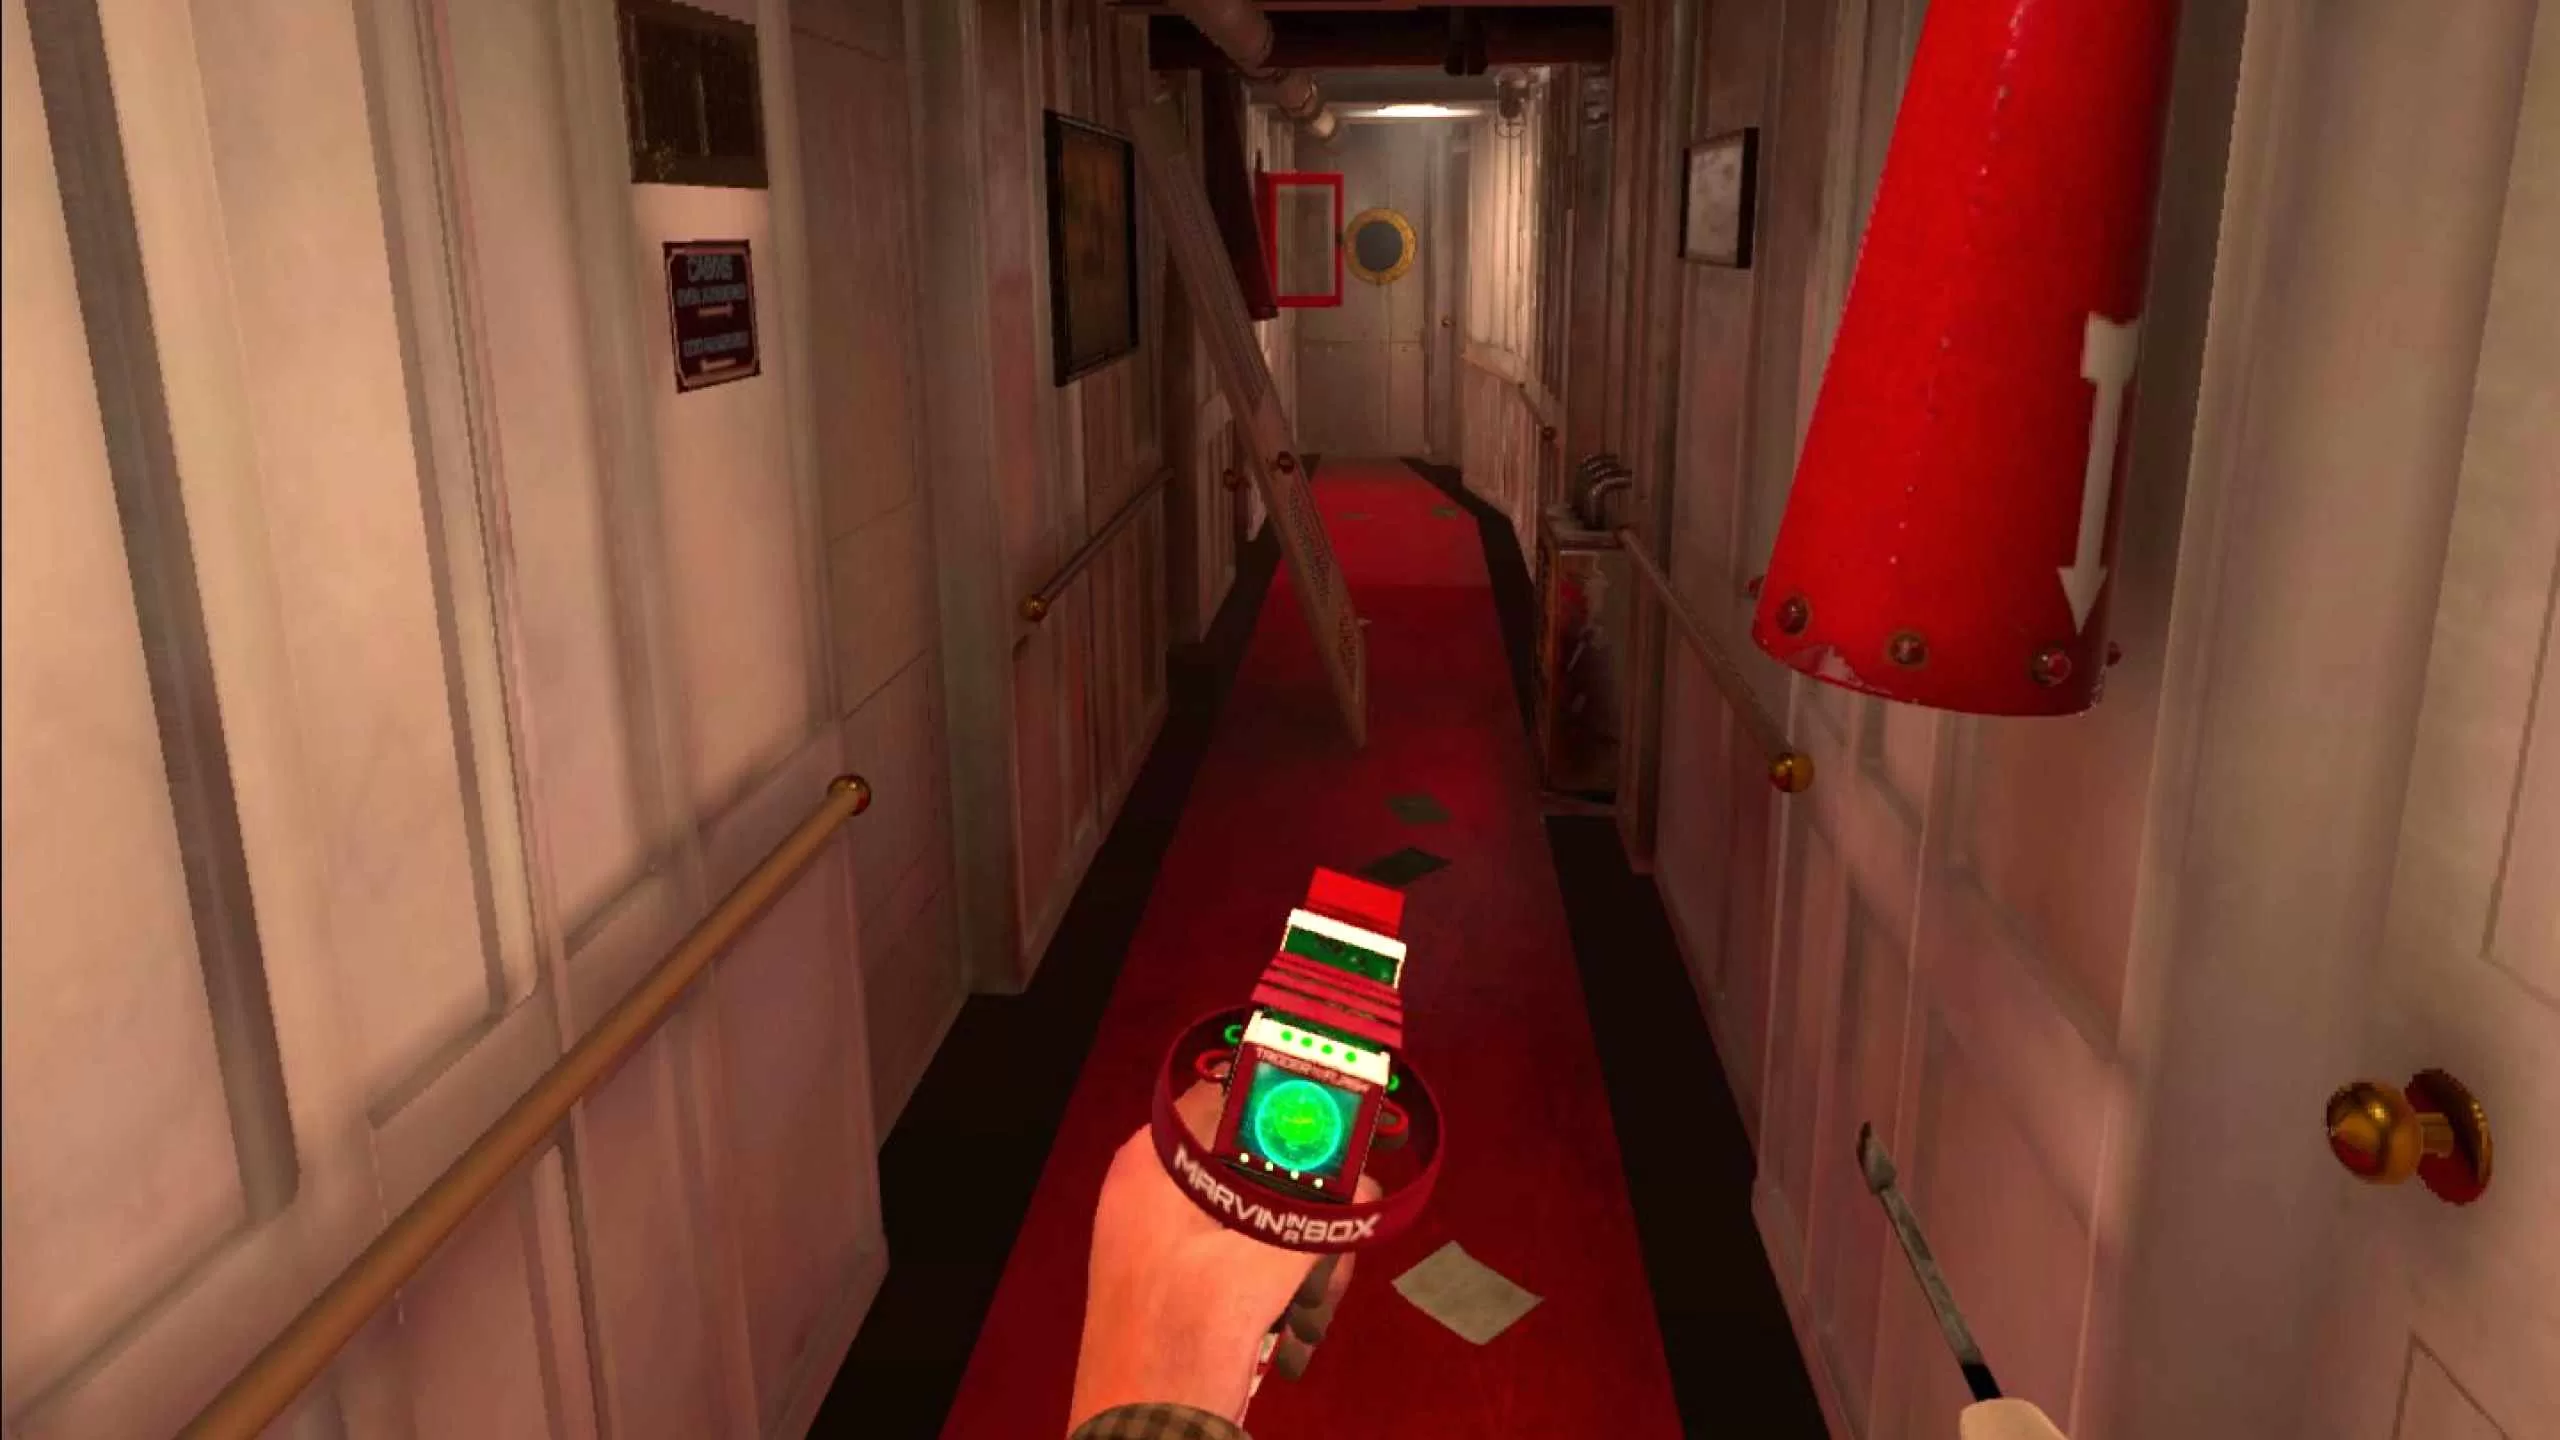 Oculus Quest 游戏《泰坦尼克号：之间的空间》Titanic: A Space Between